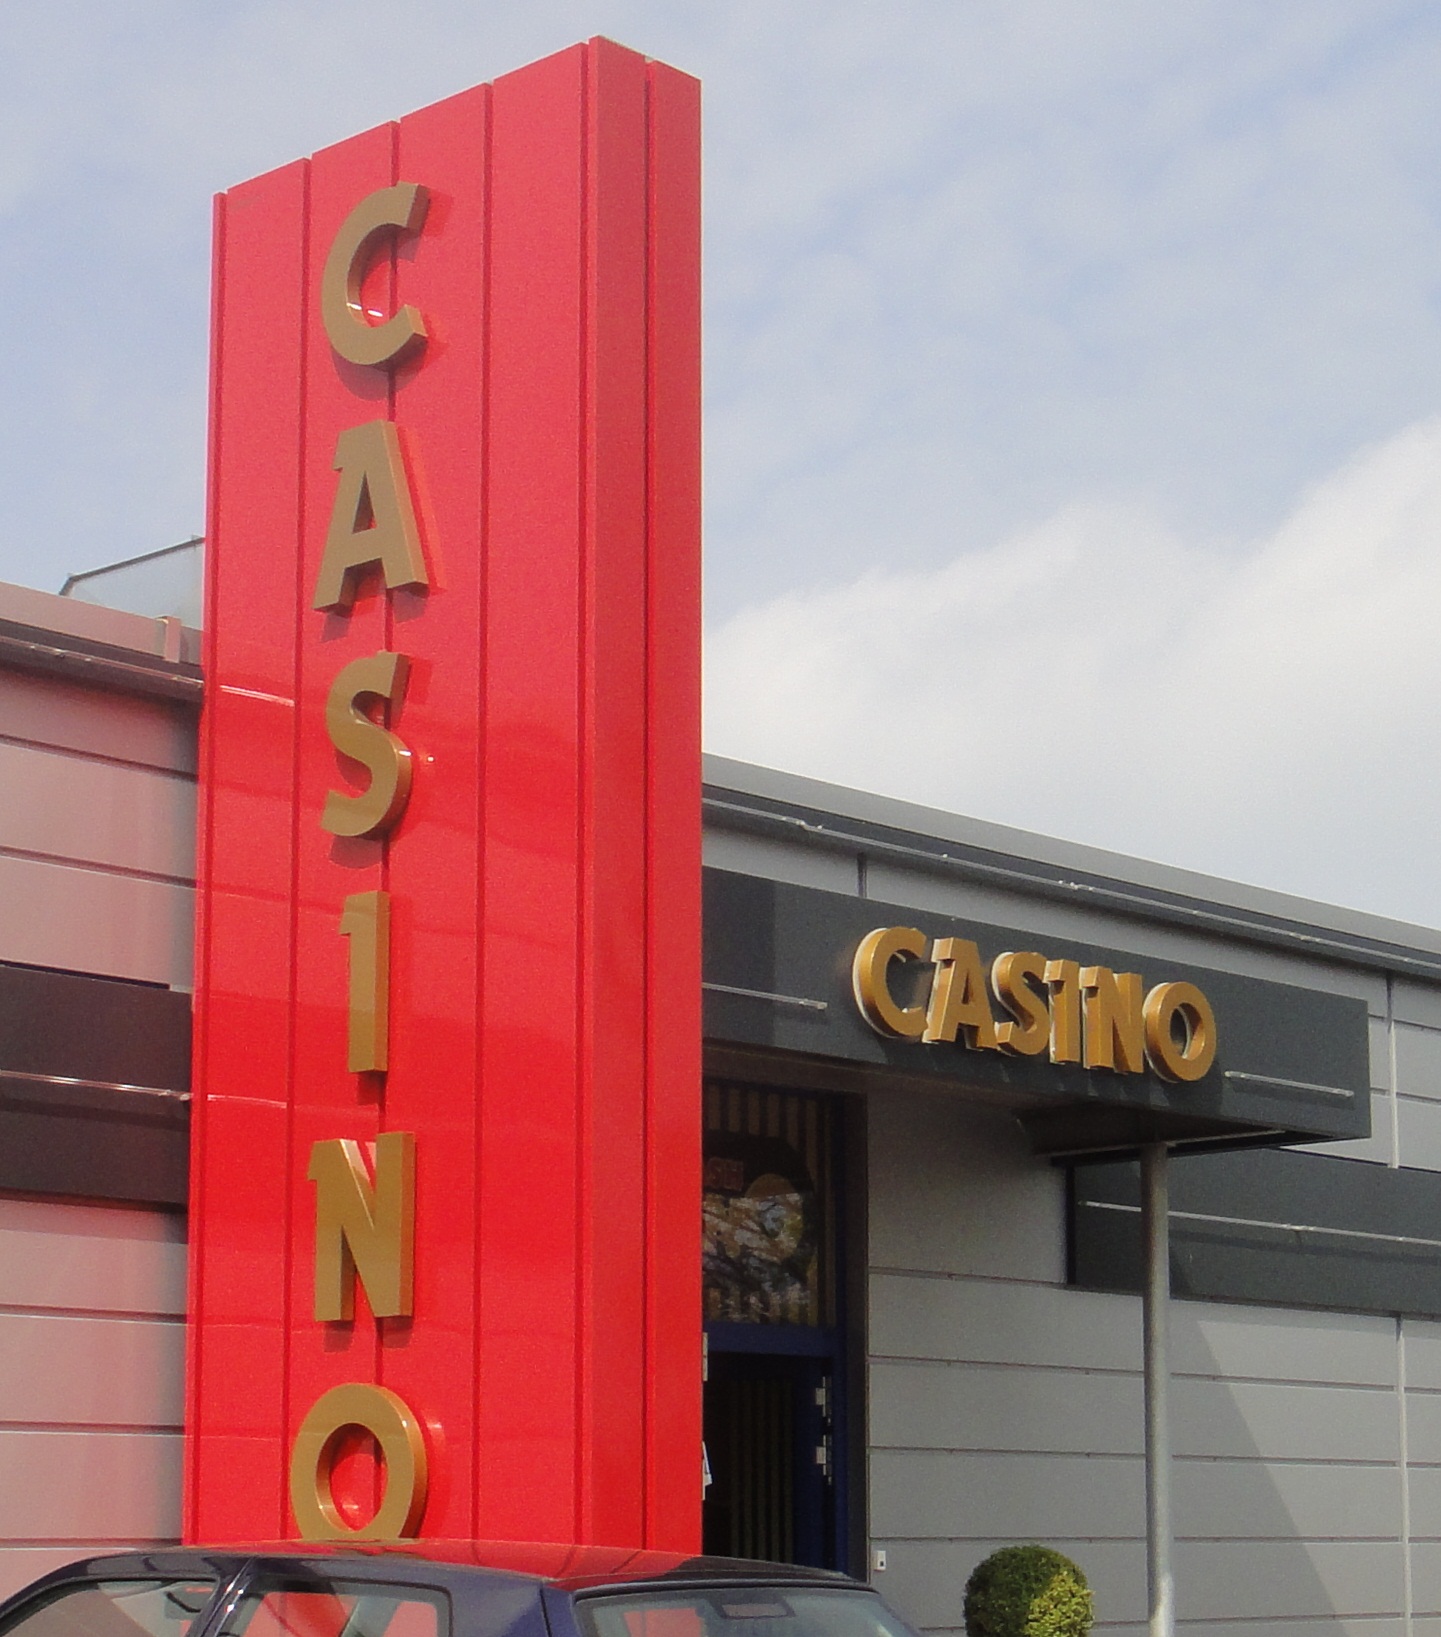 Gran casino cash kleve candelabros-29692